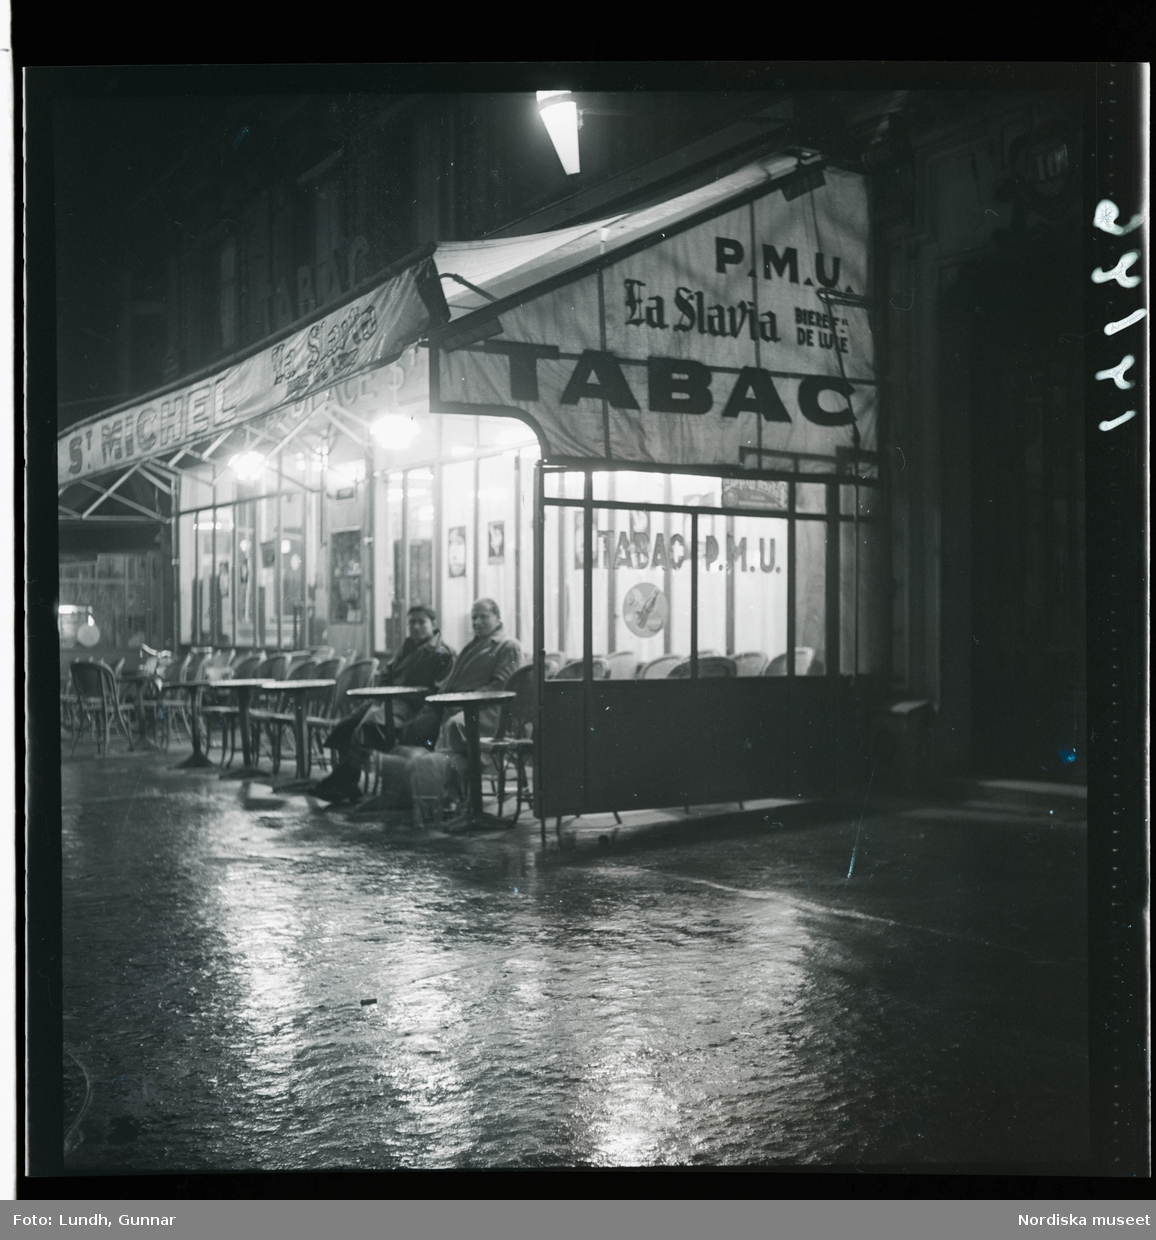 1950. Paris. "St Michel La Slava" gata, kvällsbild